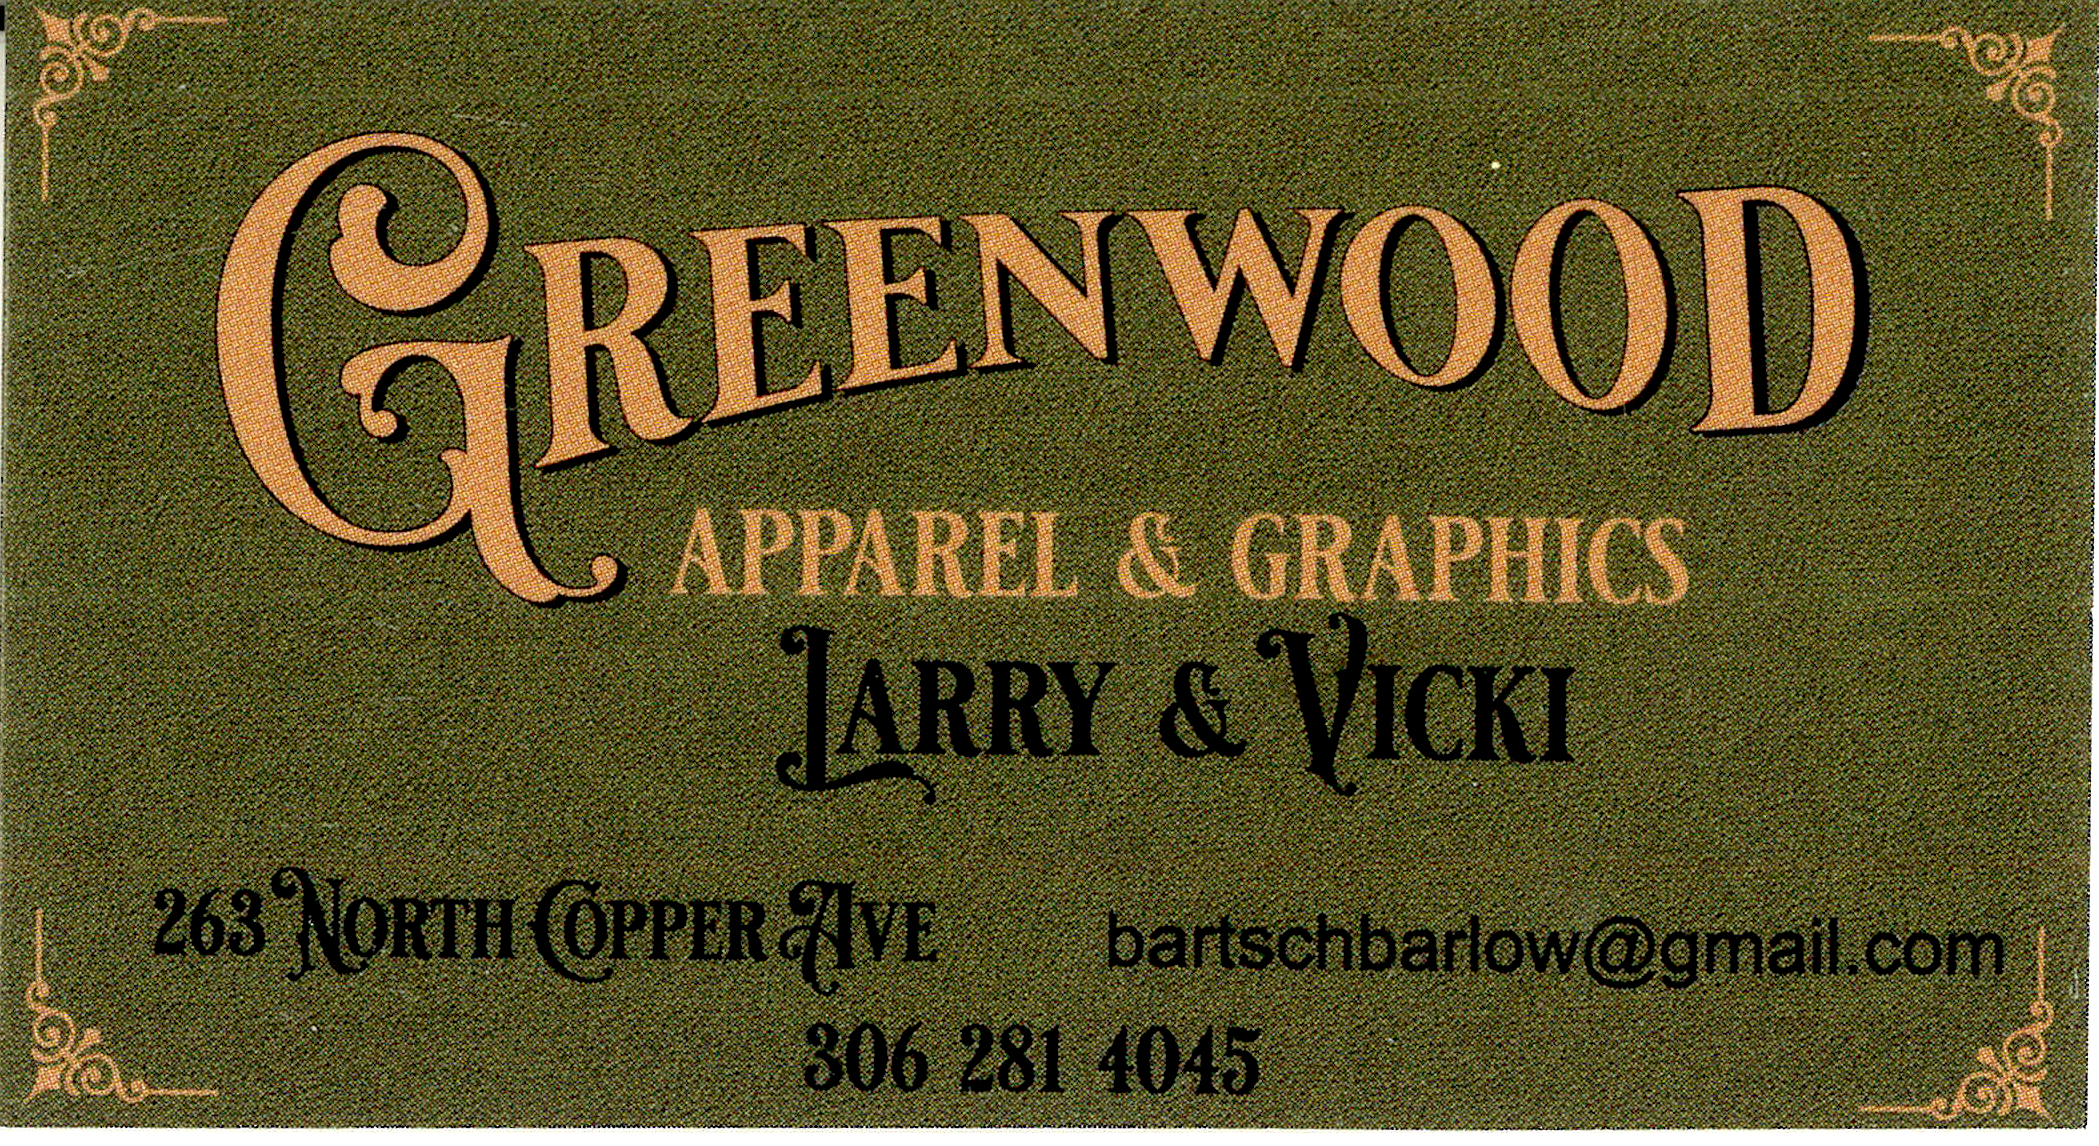 Greenwood Apparel & Graphics